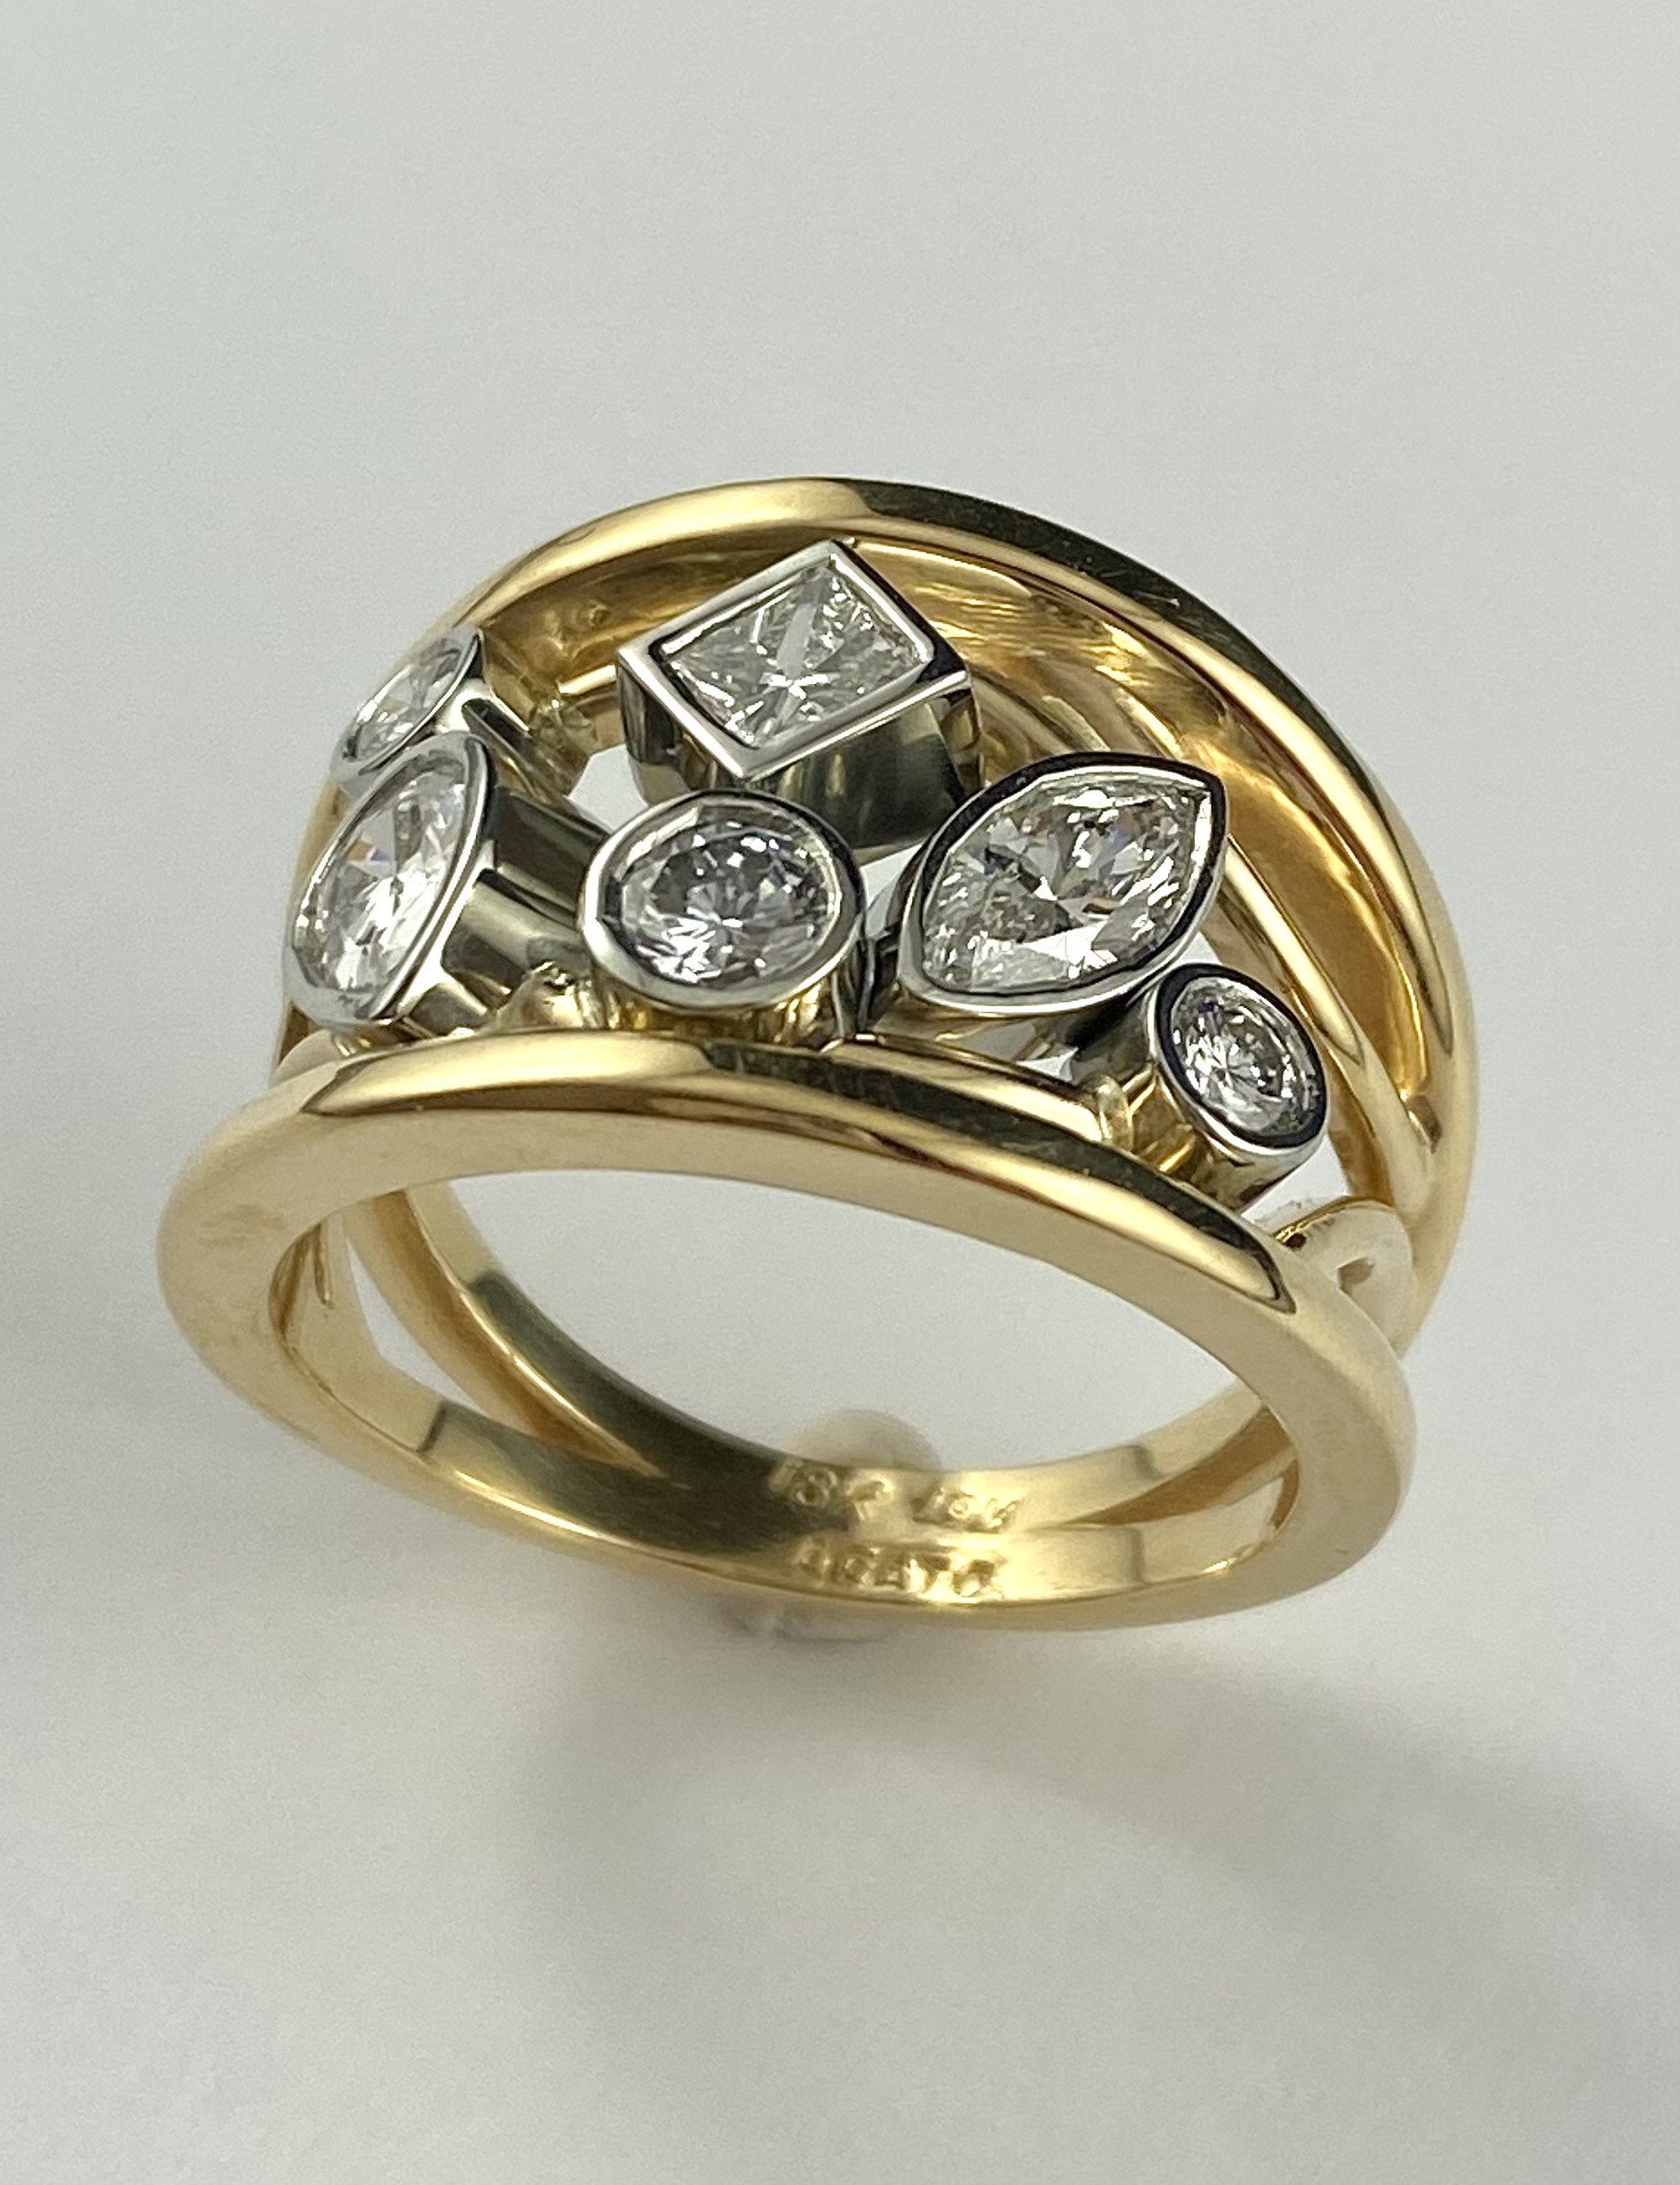 19K White and 18K Yellow Gold Multi Diamond Ring